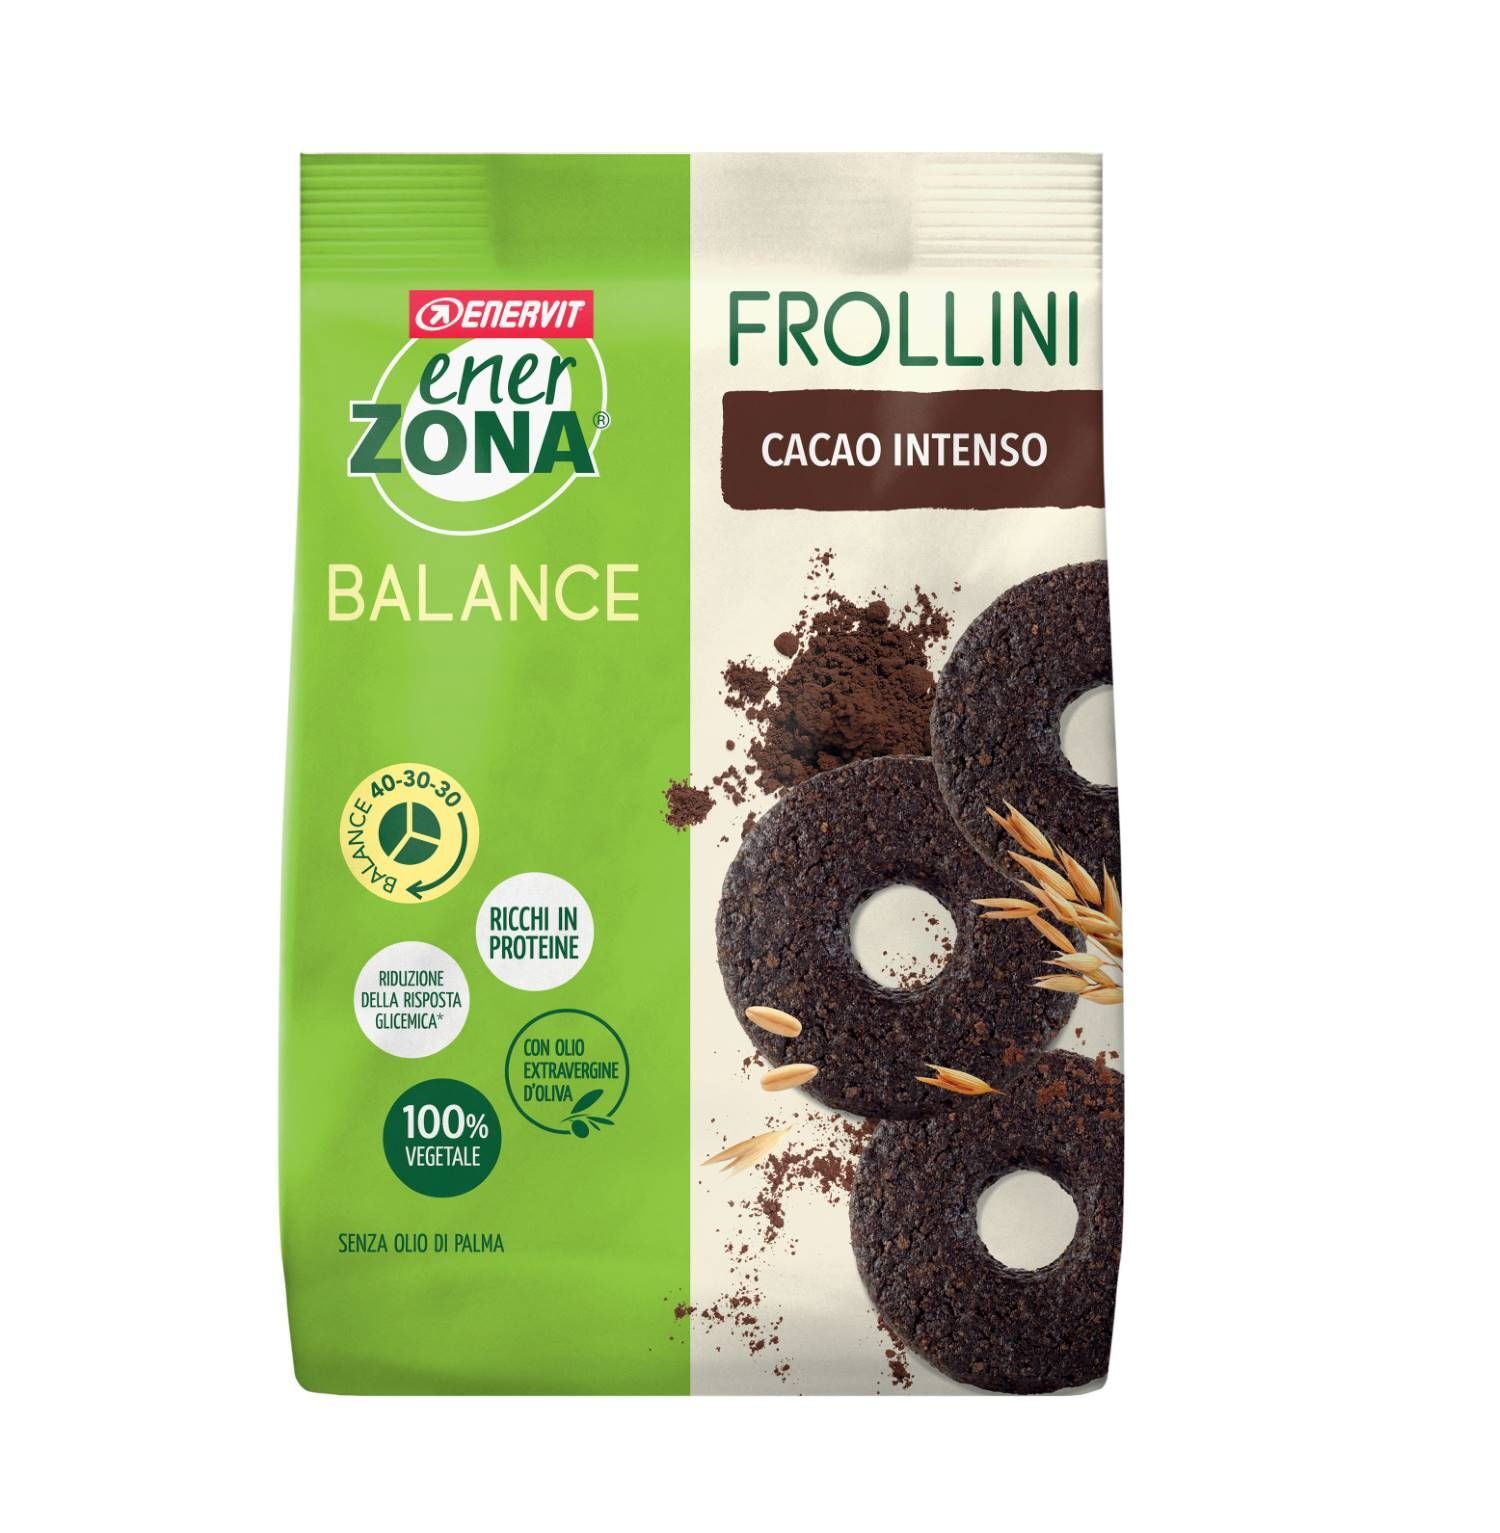 Enervit Enerzona Balance Frollini Cacao Intenso 250g